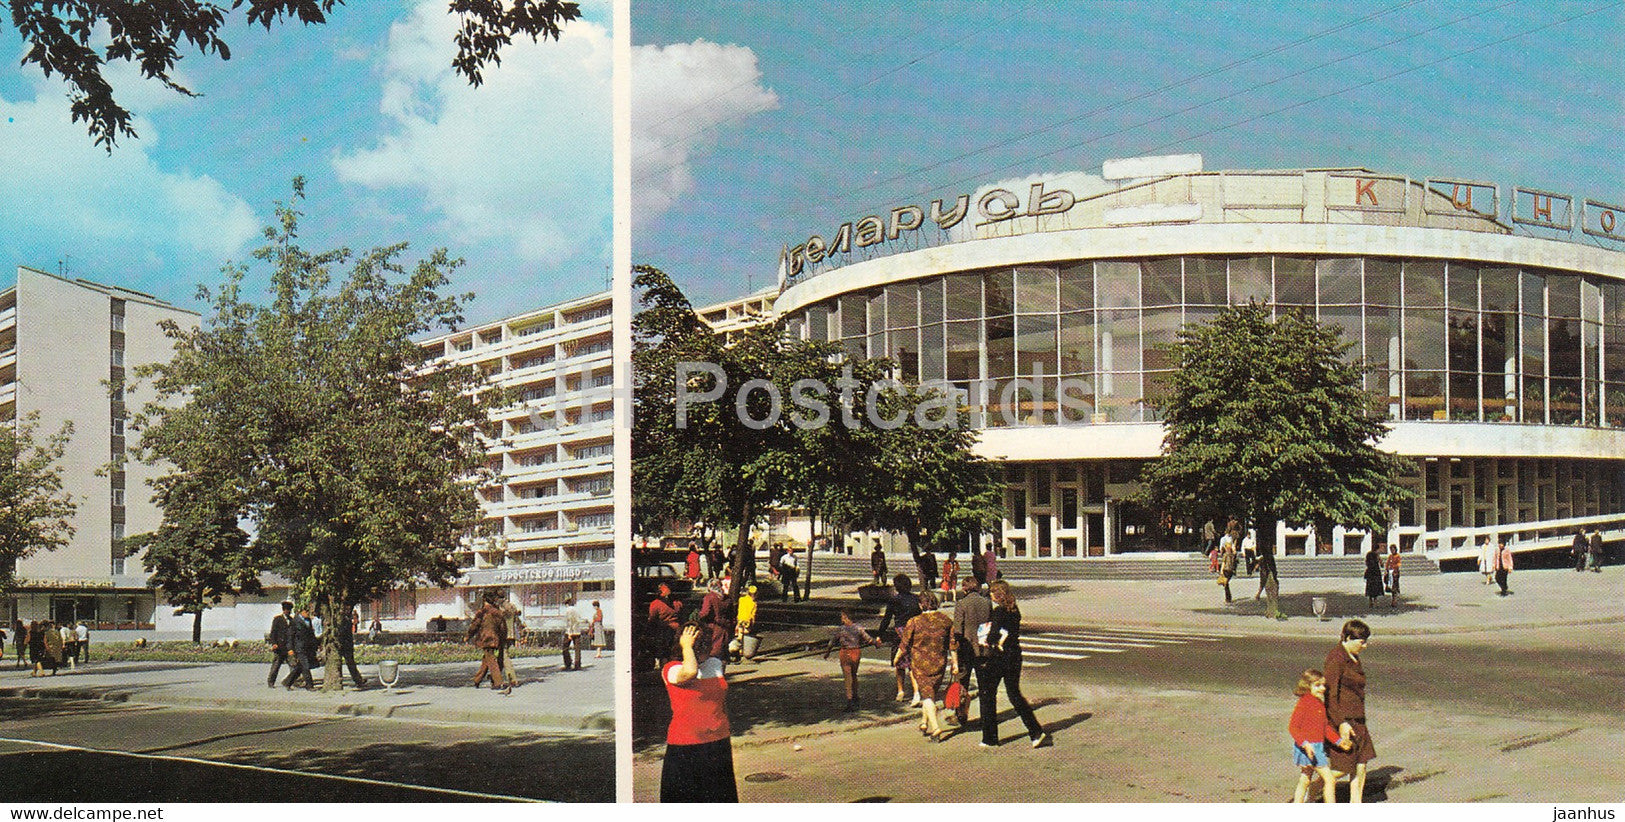 Brest - One of the city nooks - cinema Belarus - 1981 - Belarus USSR - unused - JH Postcards